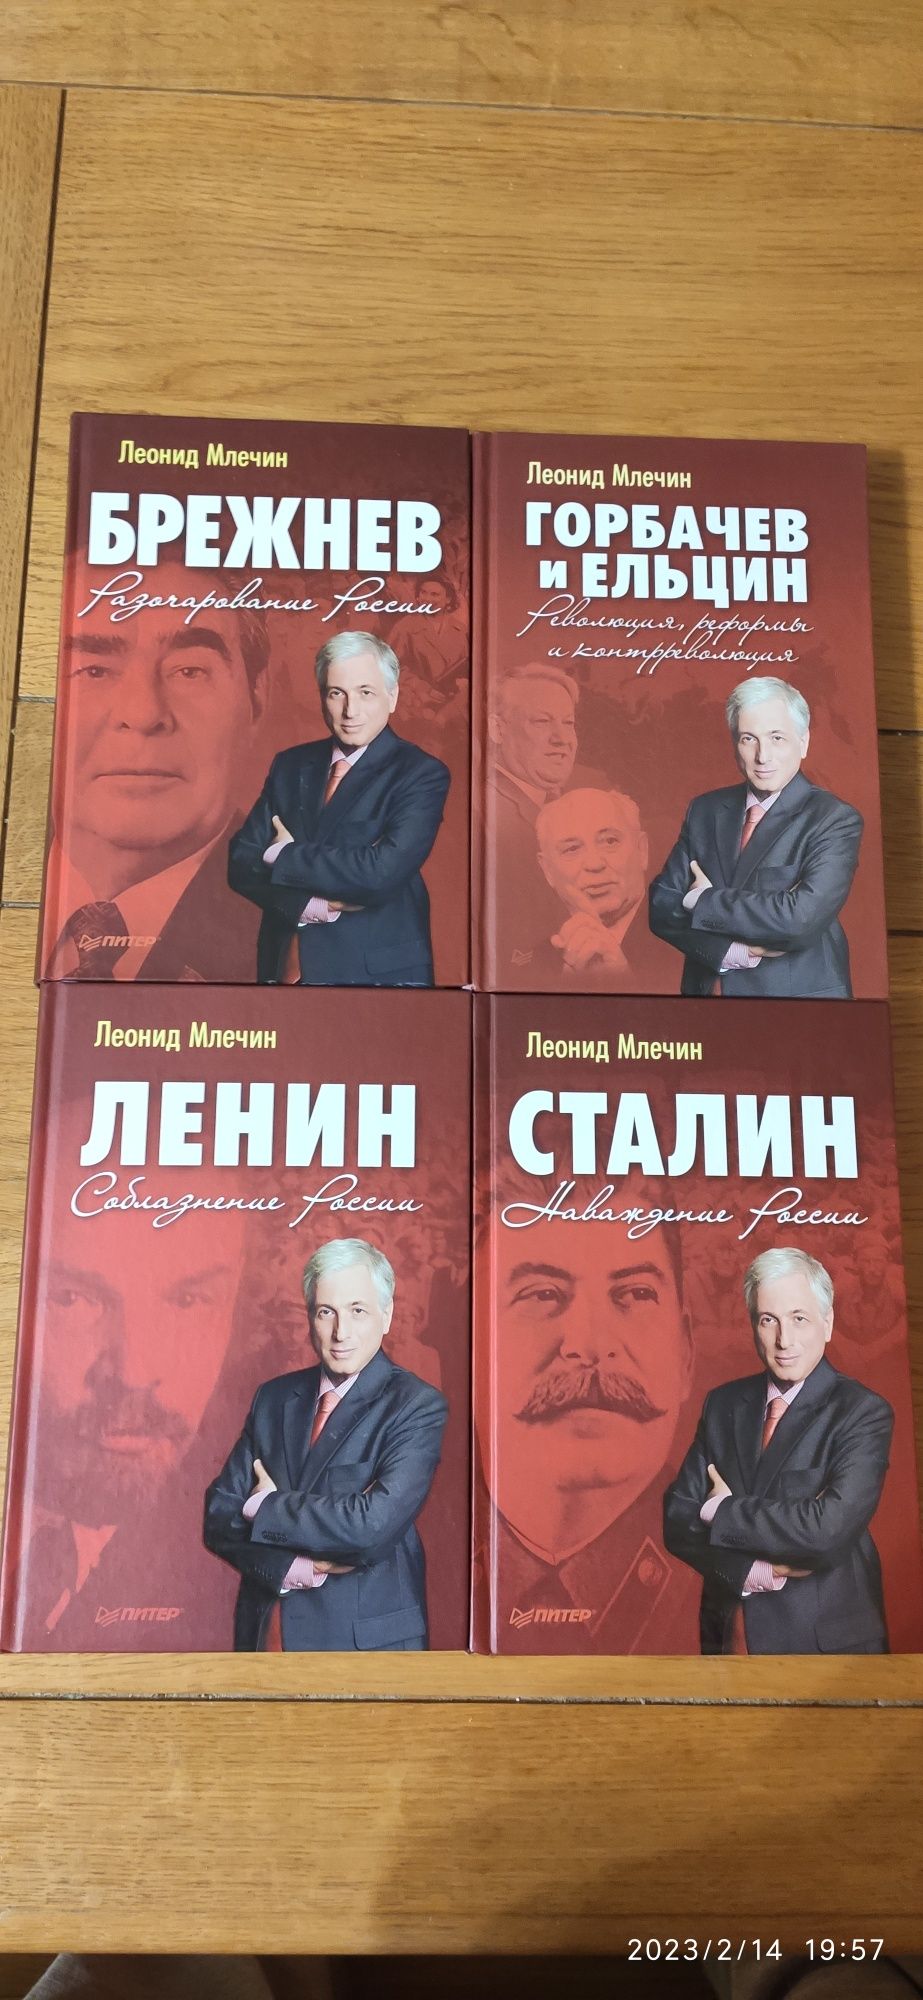 Книги  Л. Млечина ,о вождях Советского Союза